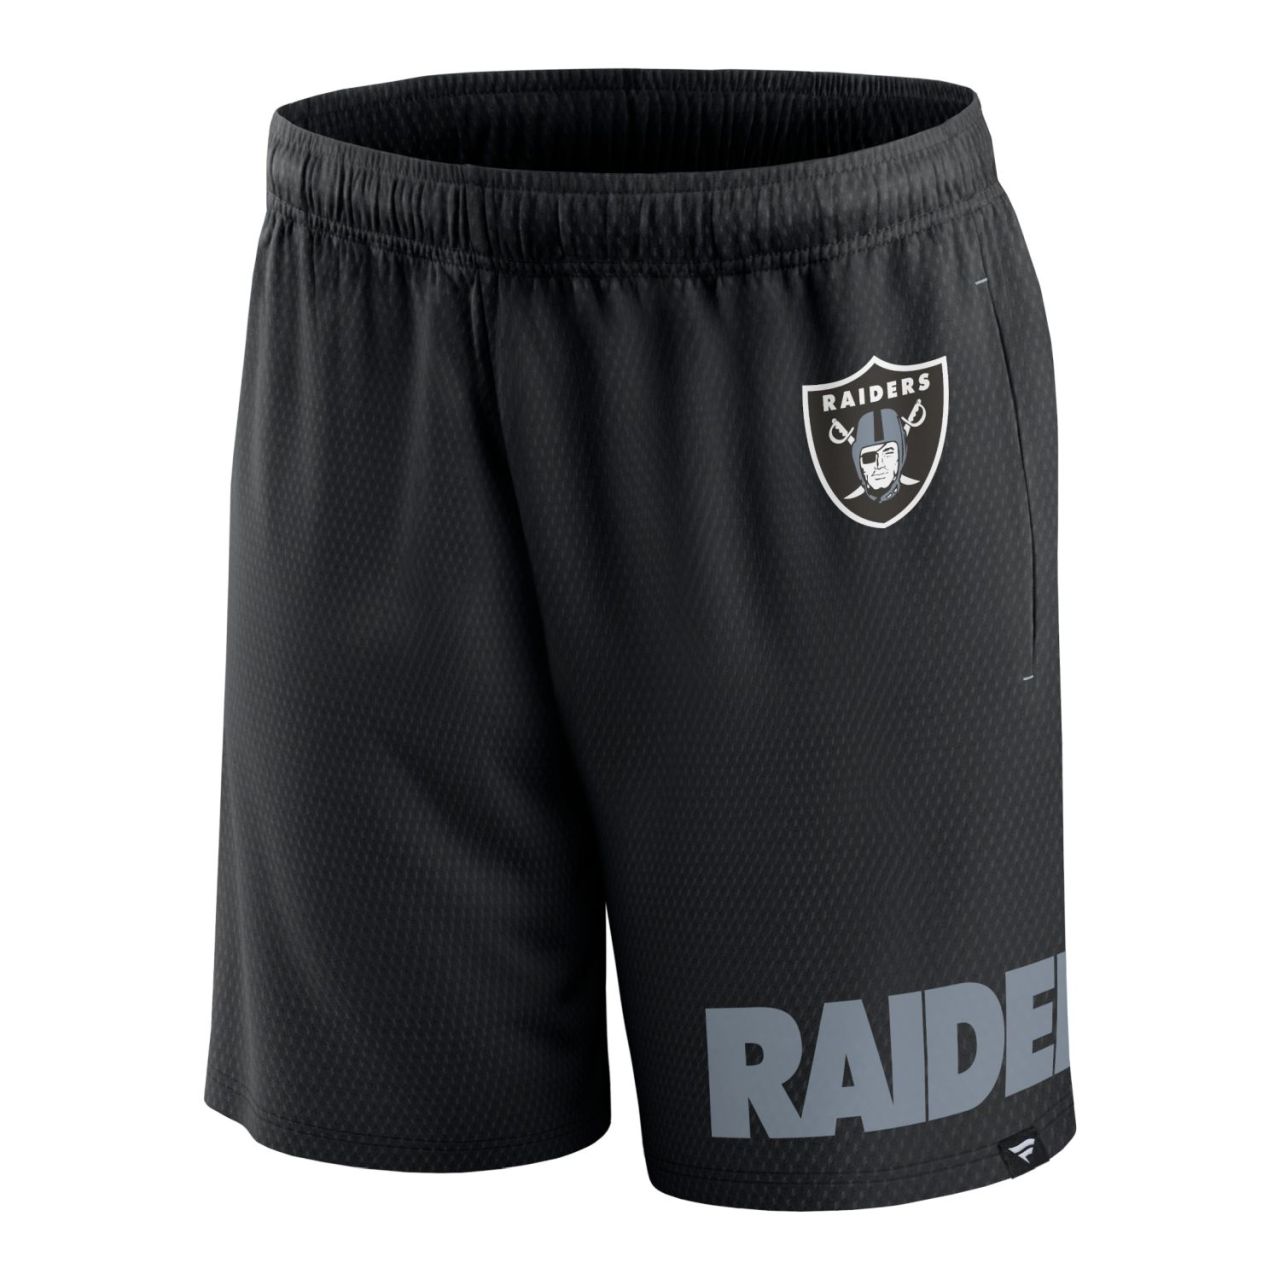 Fanatics Las Vegas Raiders NFL Mesh Shorts